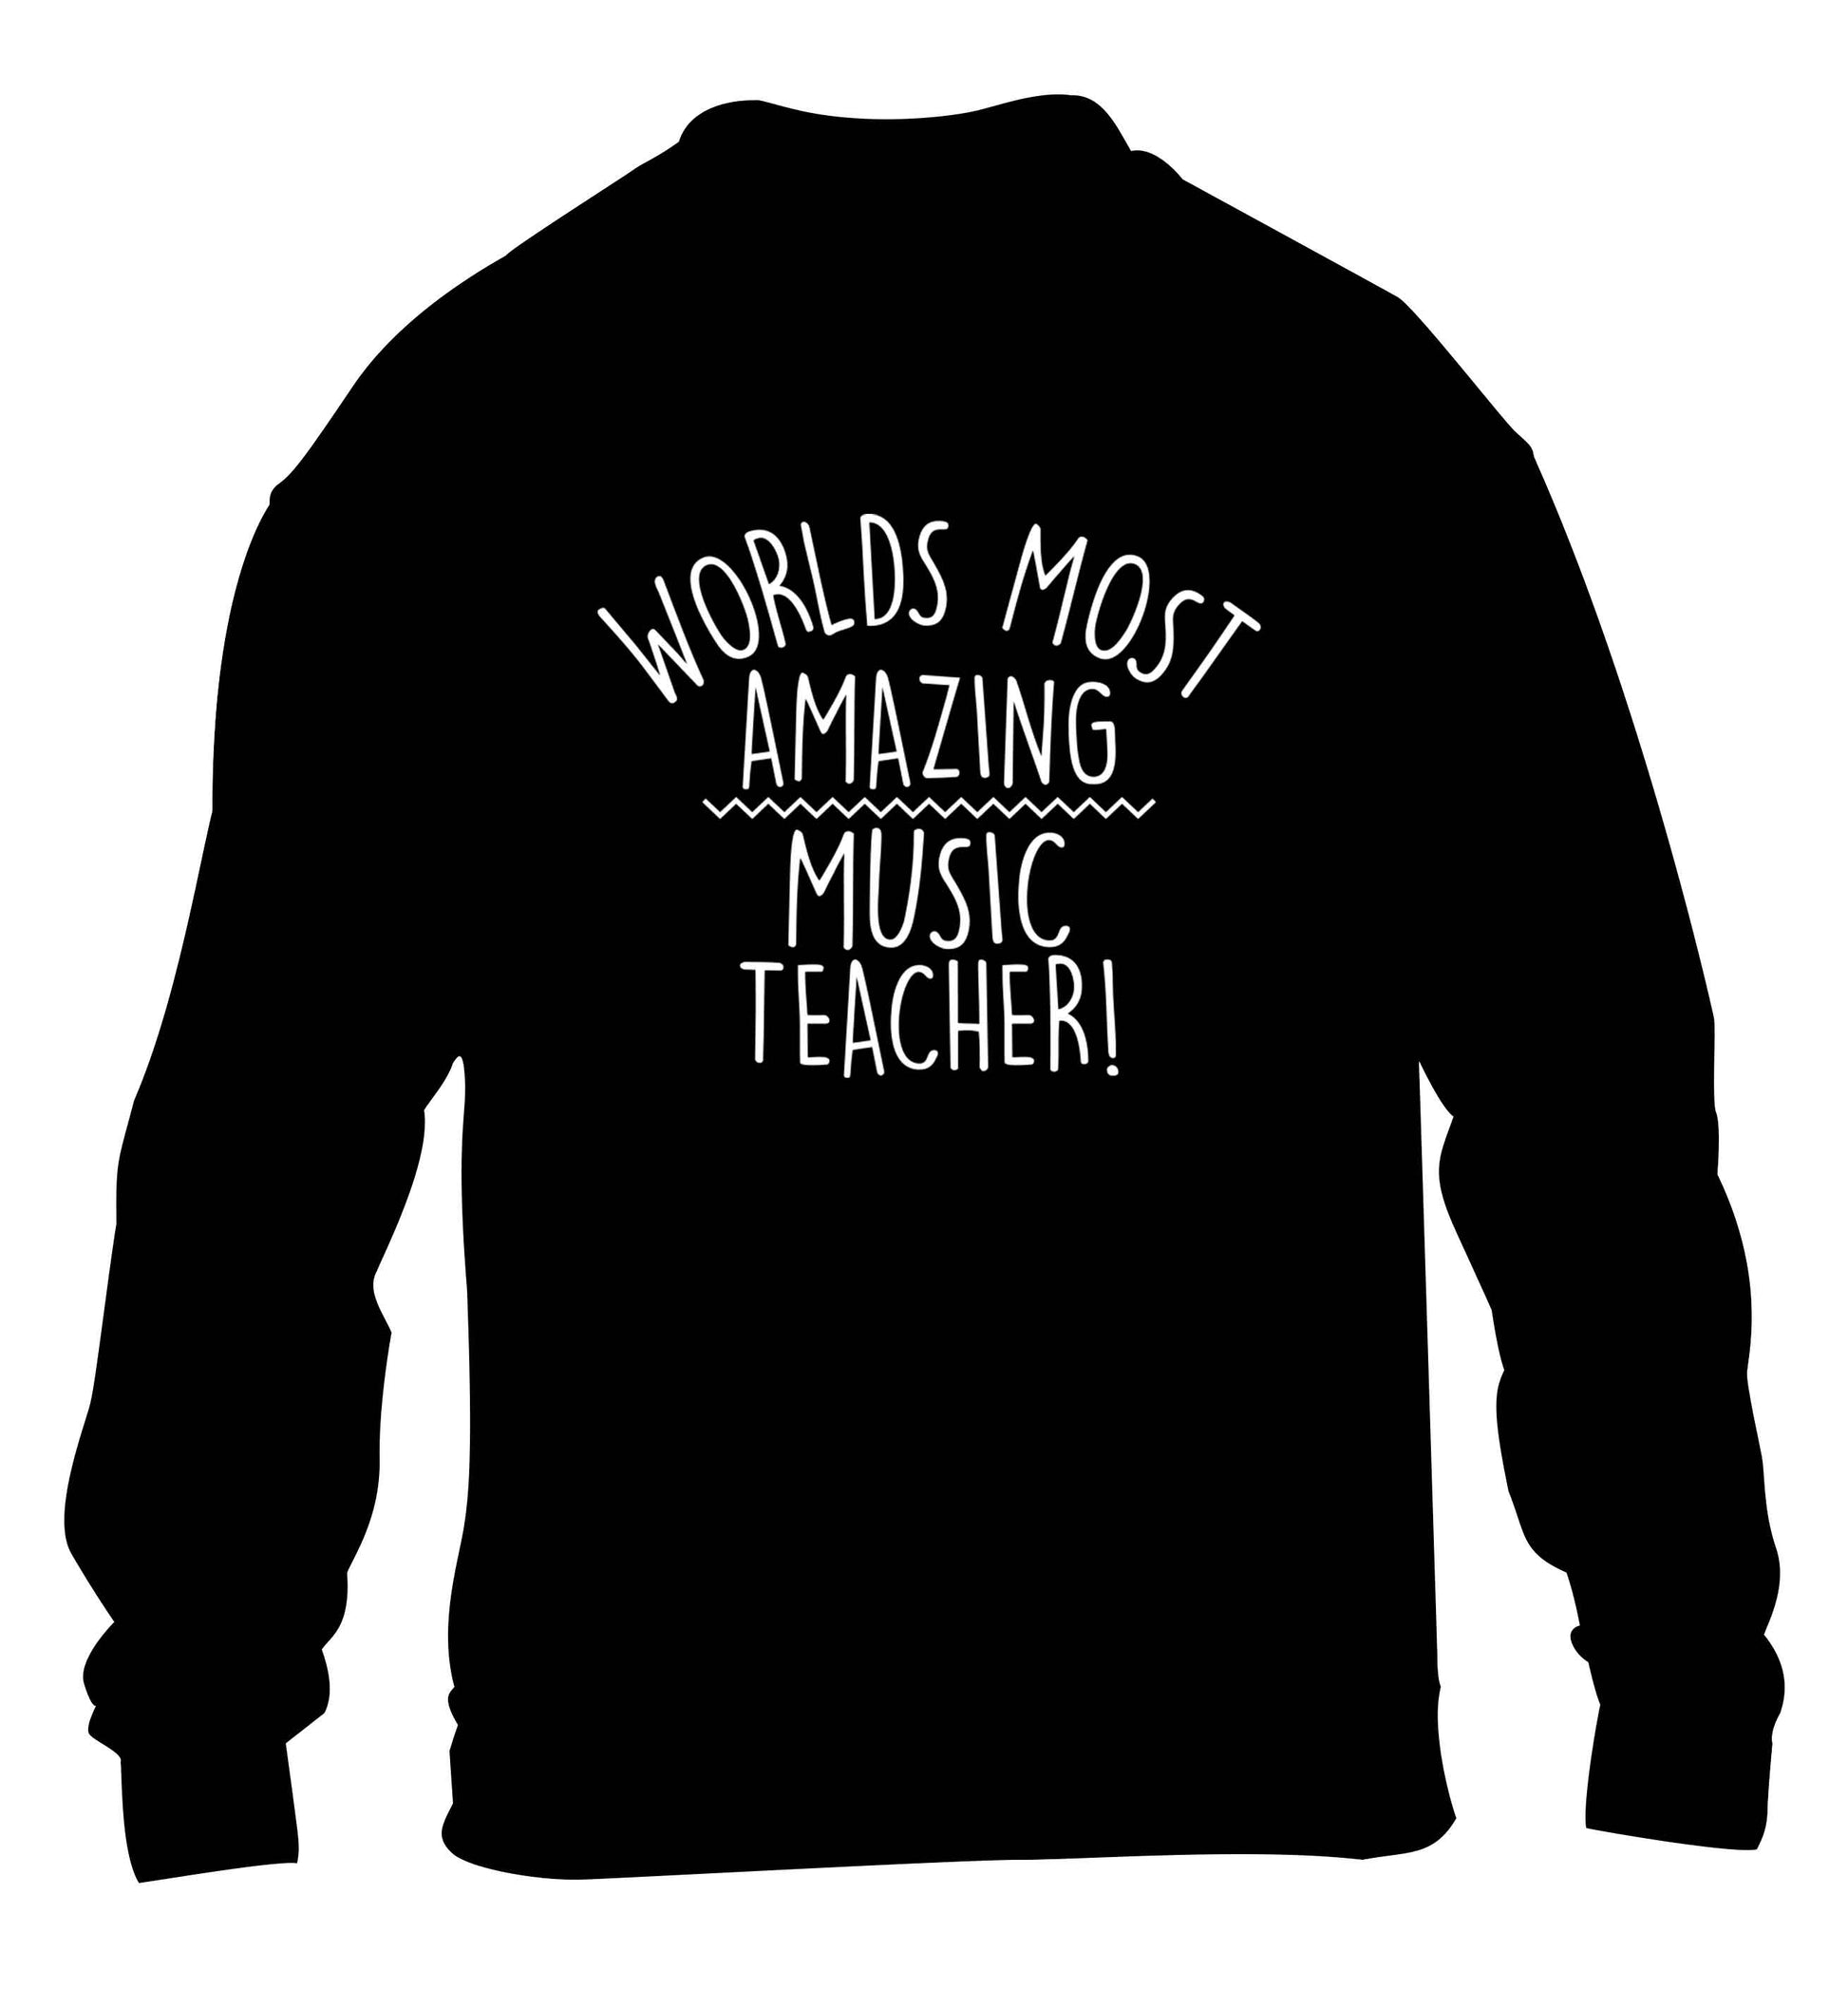 Worlds most amazing music teacher children's black sweater 12-13 Years